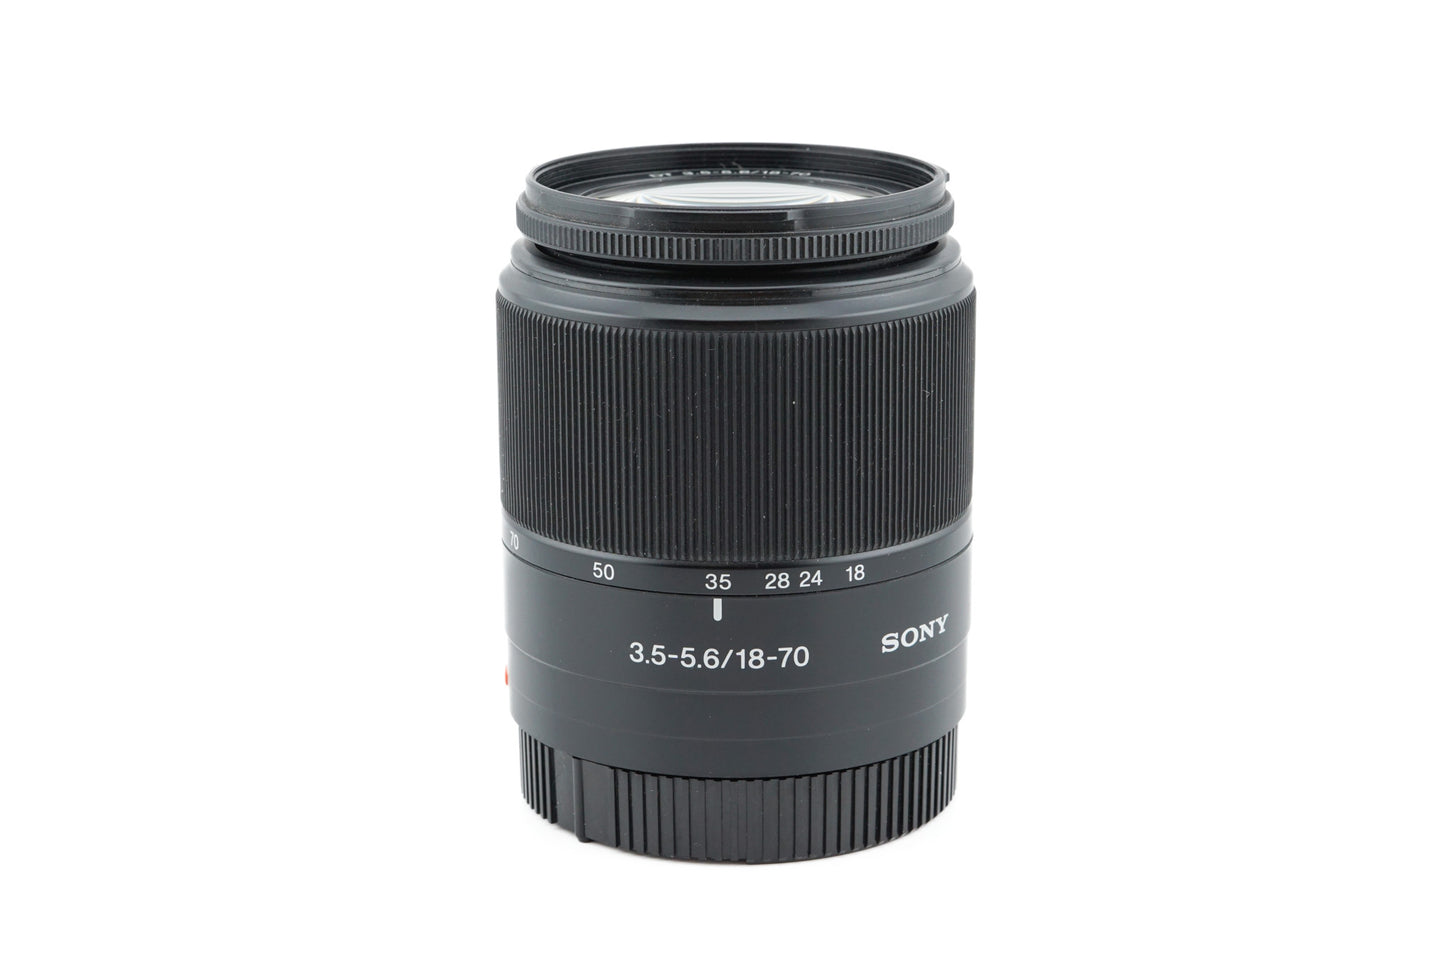 Sony 18-70mm f3.5-5.6 DT Macro - Lens